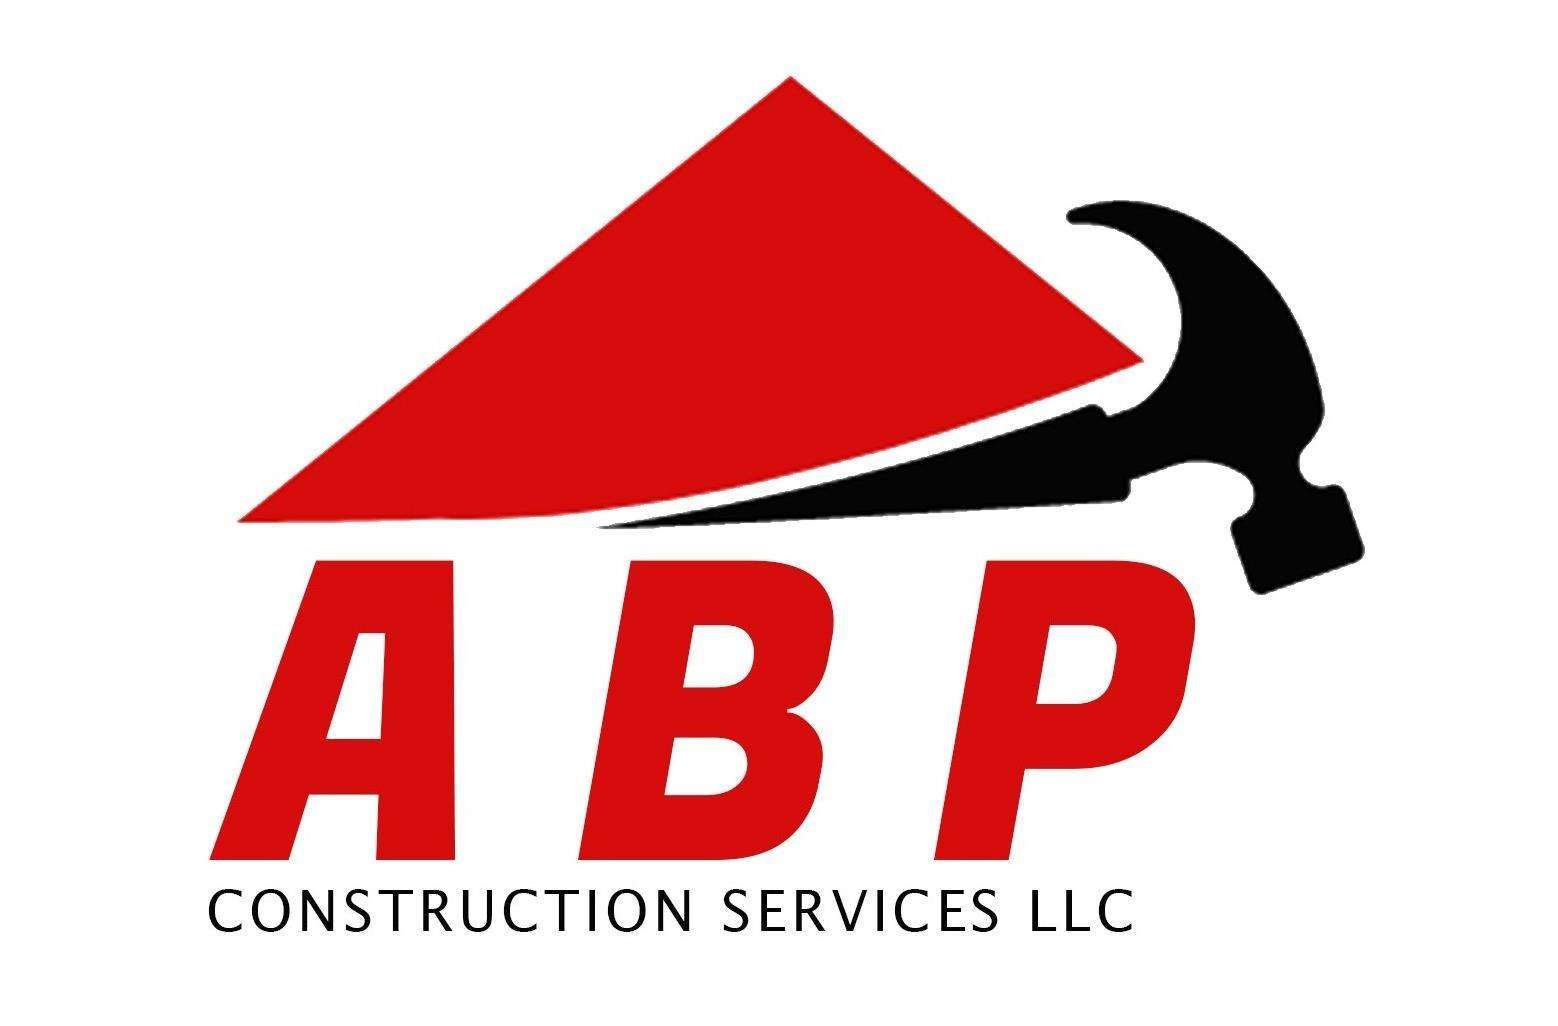 Abp Ananda Logo PNG Images (Transparent HD Photo Clipart) | Photo clipart,  Png images, Clip art